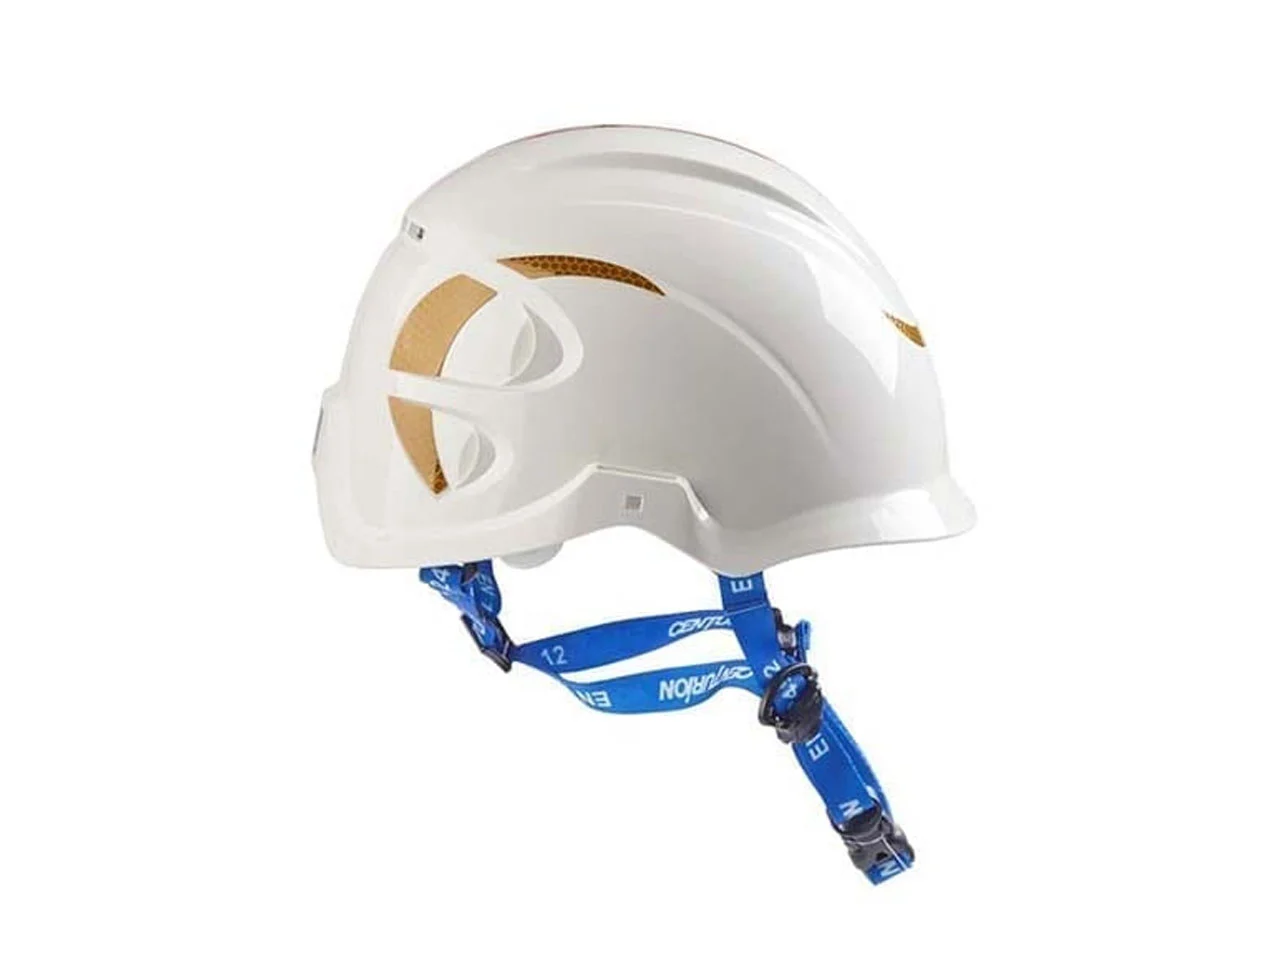 STIHL STIHL 0000 888 0810 Chainsaw Protect Basic Safety Helmet Earmuff Set